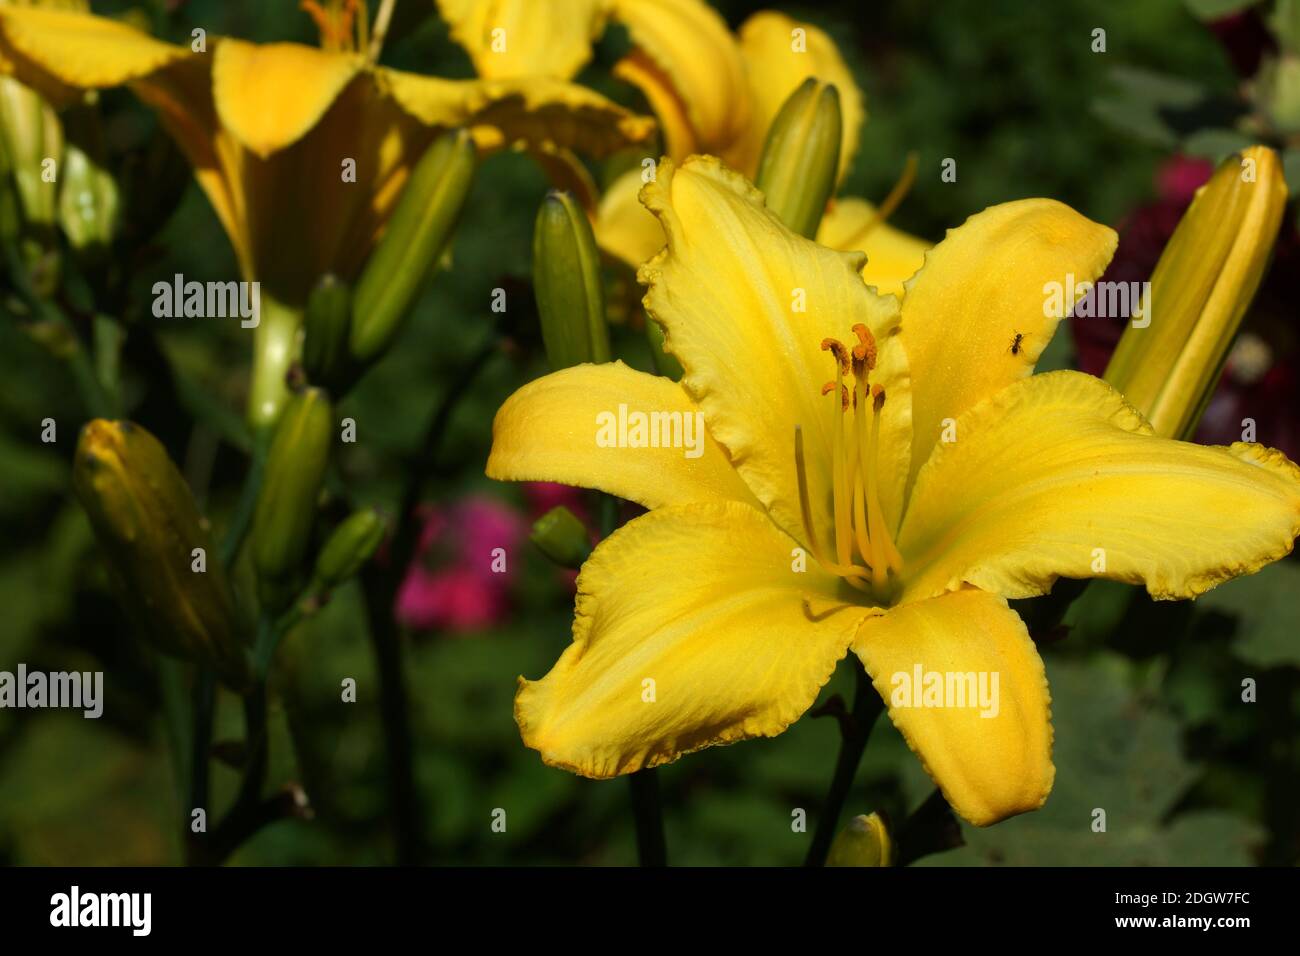 Gelbe Taglilien Spinnen. Gelbe Taglilien blühen im Freien. Stockfoto